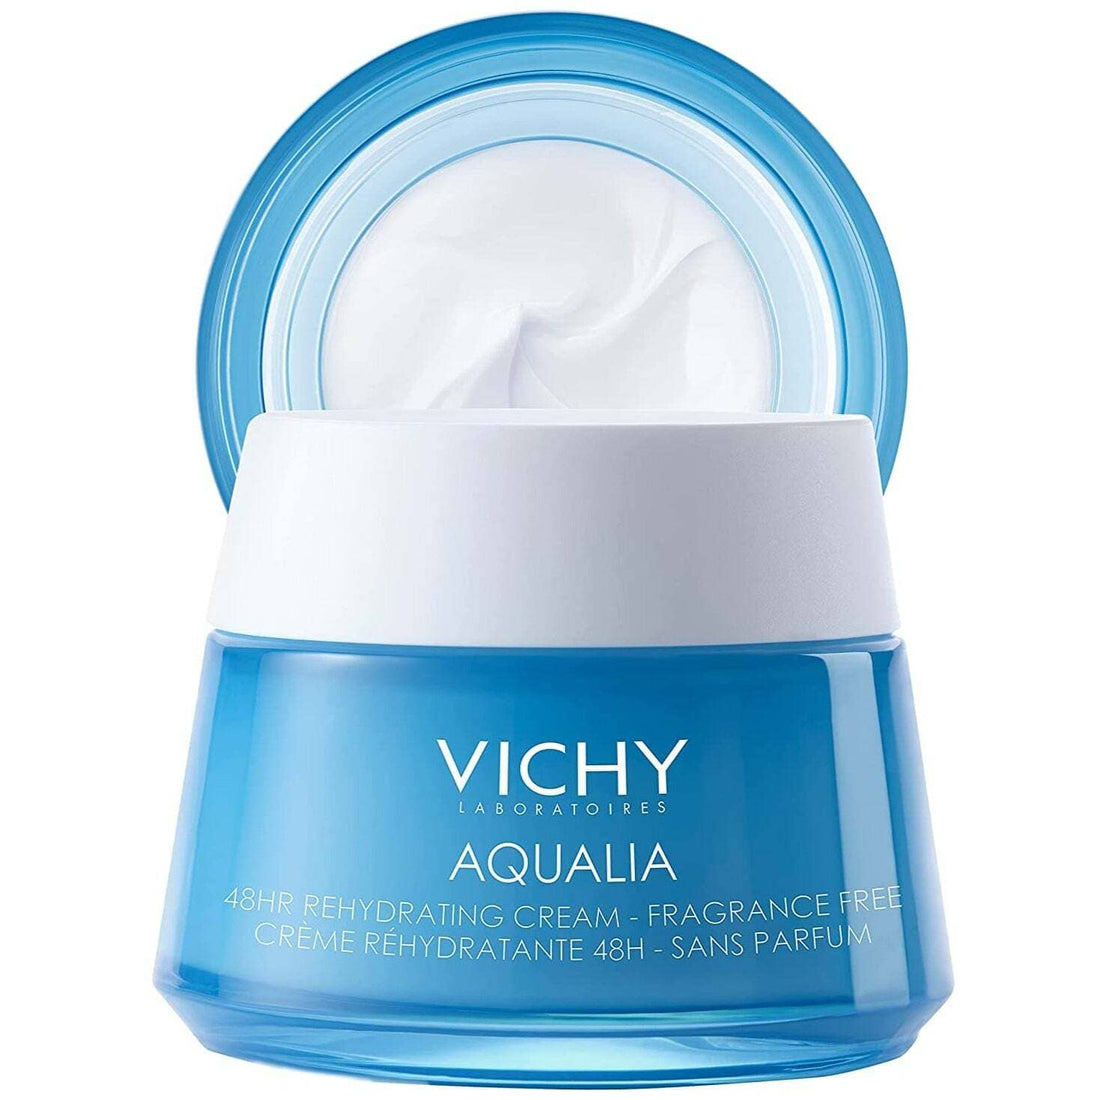 Vichy Aqualia Fragrance Free moisturizer shop at Skin Type Solutions